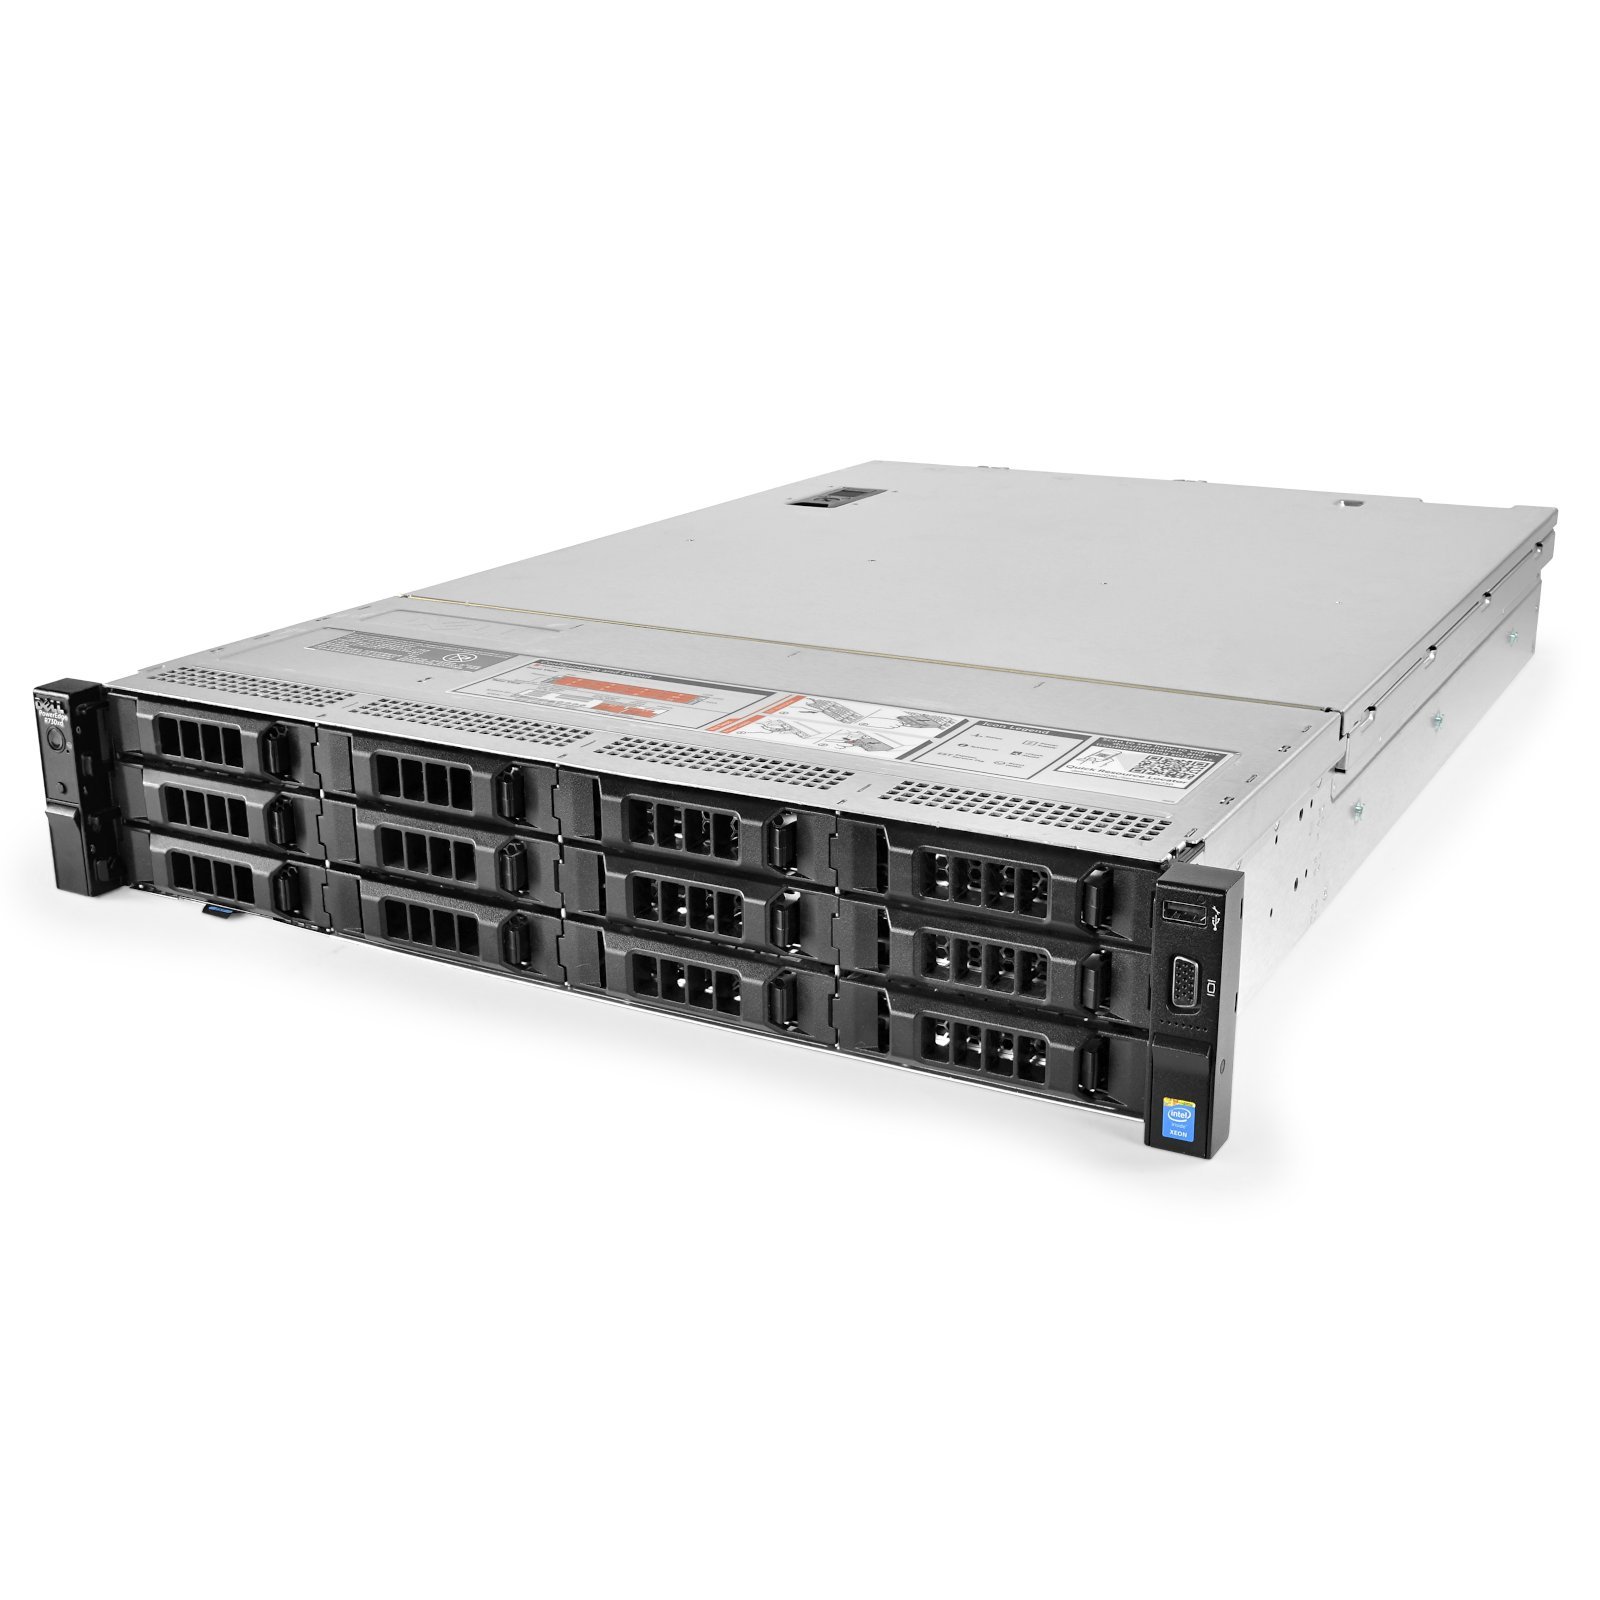 Подробное фото Сервер DELL PowerEdge R730XD Xeon 2x E5-2690v3 128Gb 2133P DDR4 12x noHDD 3.5", SAS RAID Perc H730 mini, 1024Mb, 2*PSU 750W